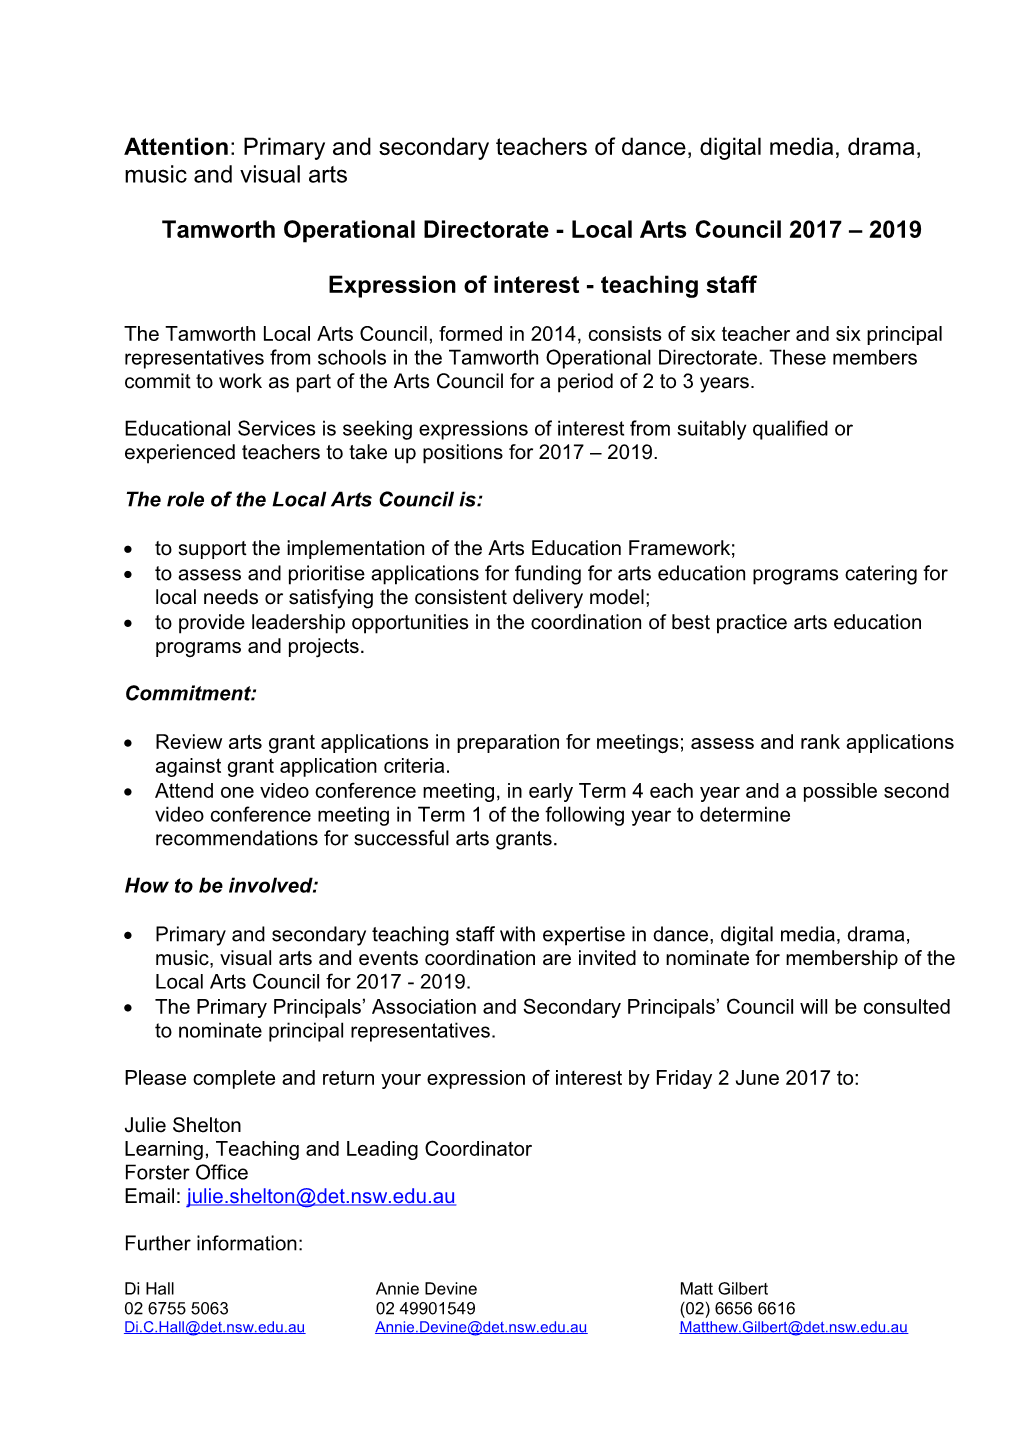 Tamworth Operational Directorate - Local Arts Council 2017 2019